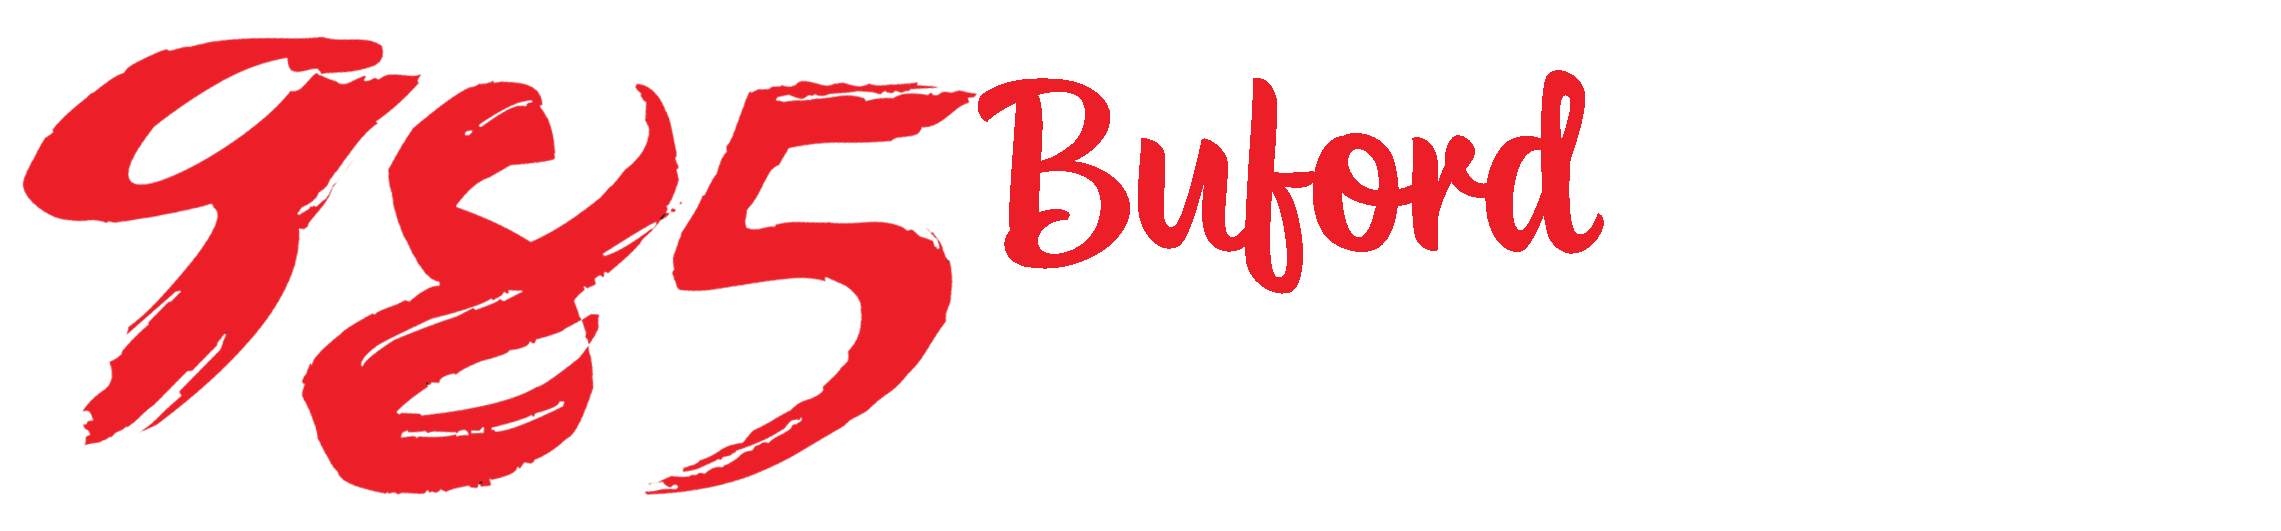 985 Korean BBQ Buford – Authentic Korean Cuisine in Georgia